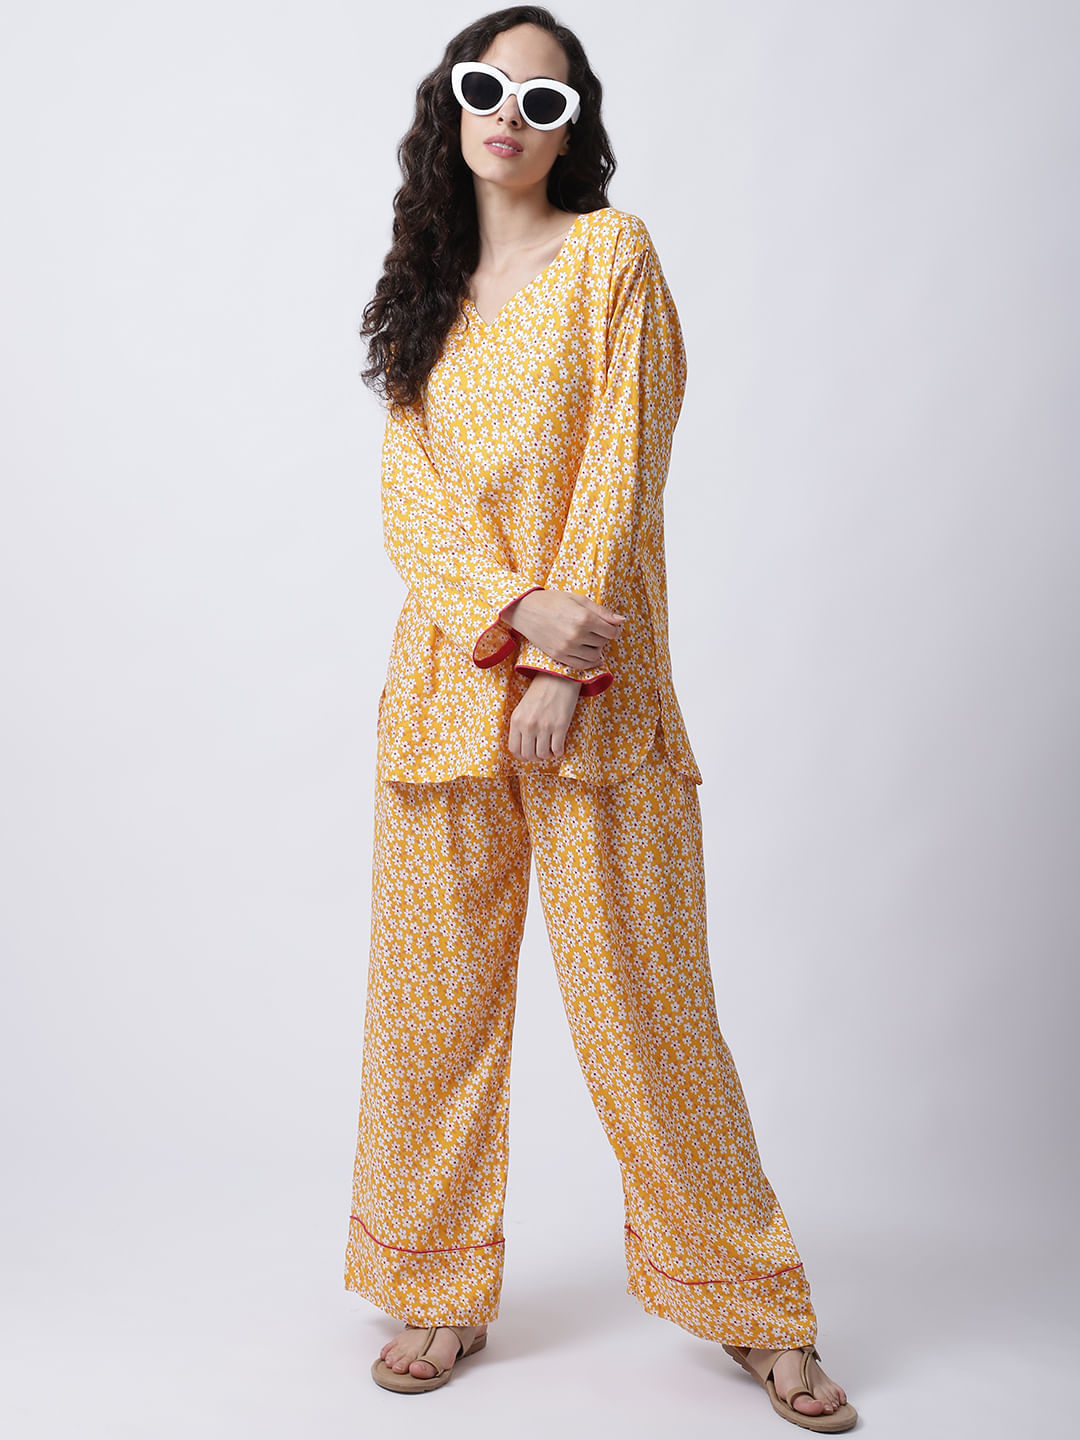 Rayon Yellow Floral Printed Night Suit set of Top & Pyjama trouser